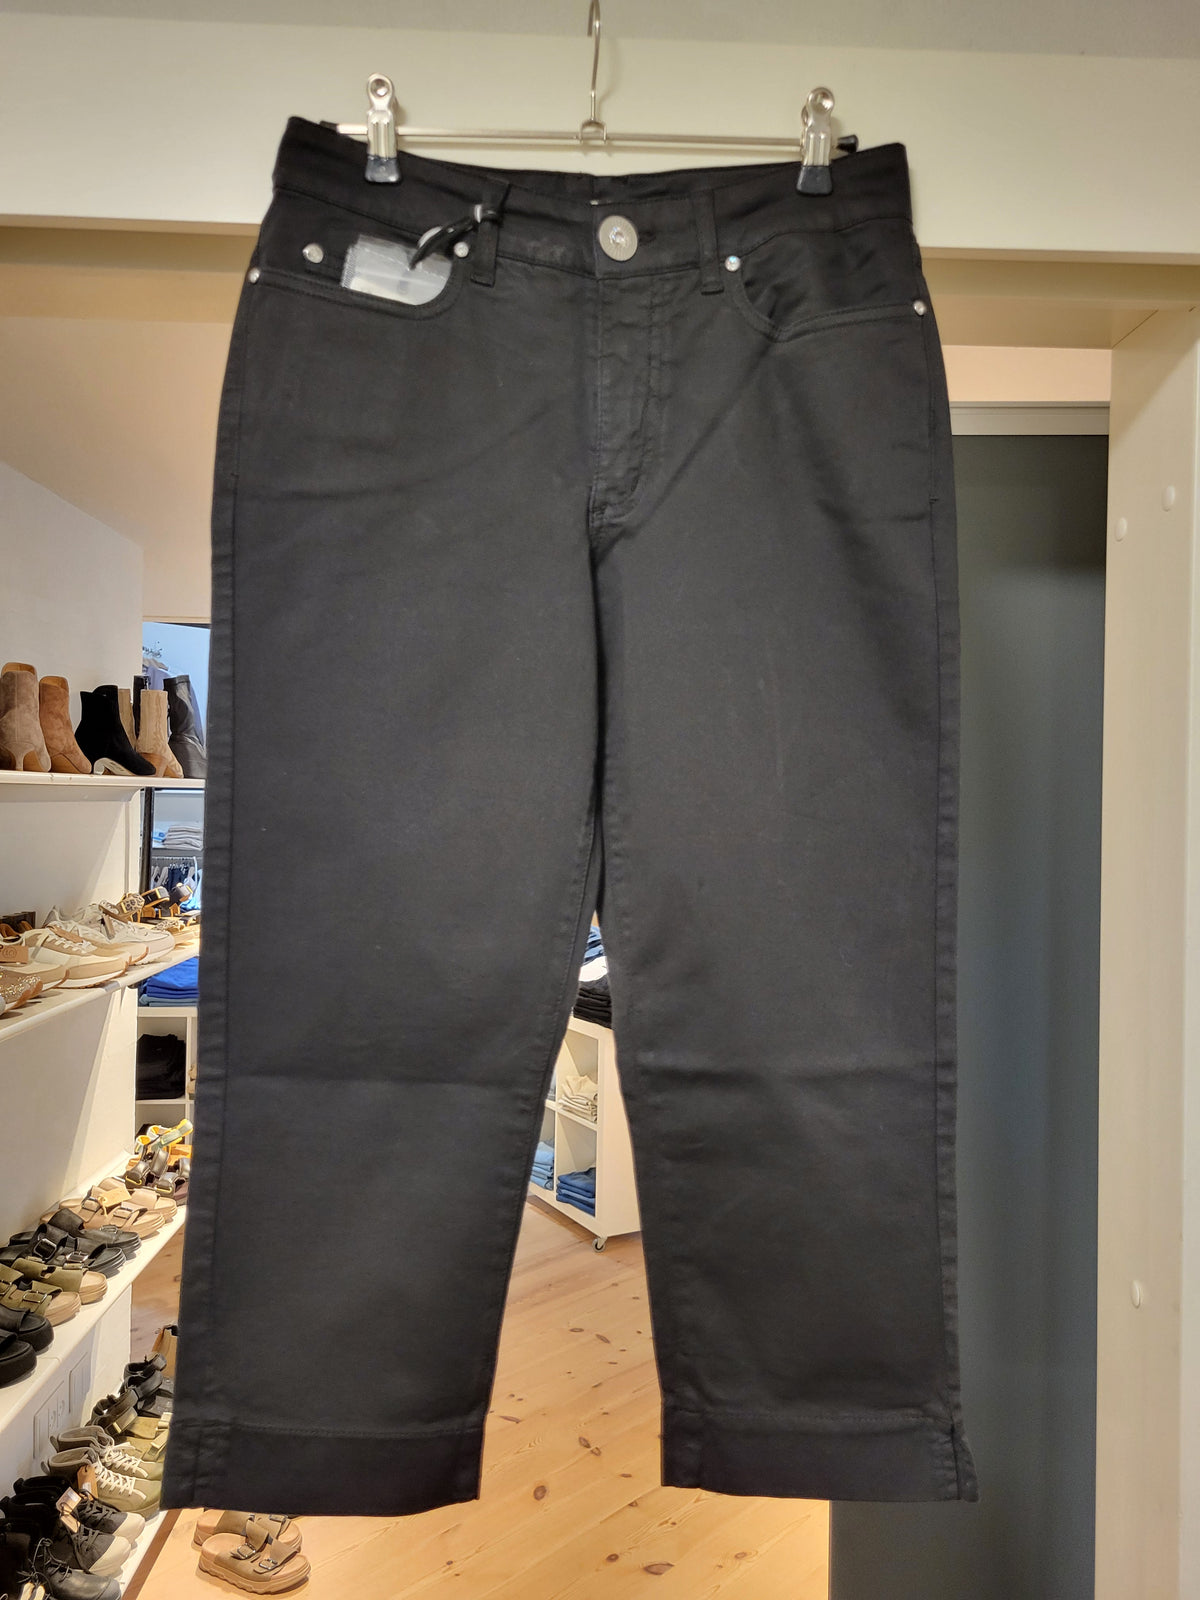 Jonny Q jeans P1021 Stretch Sateen, Black